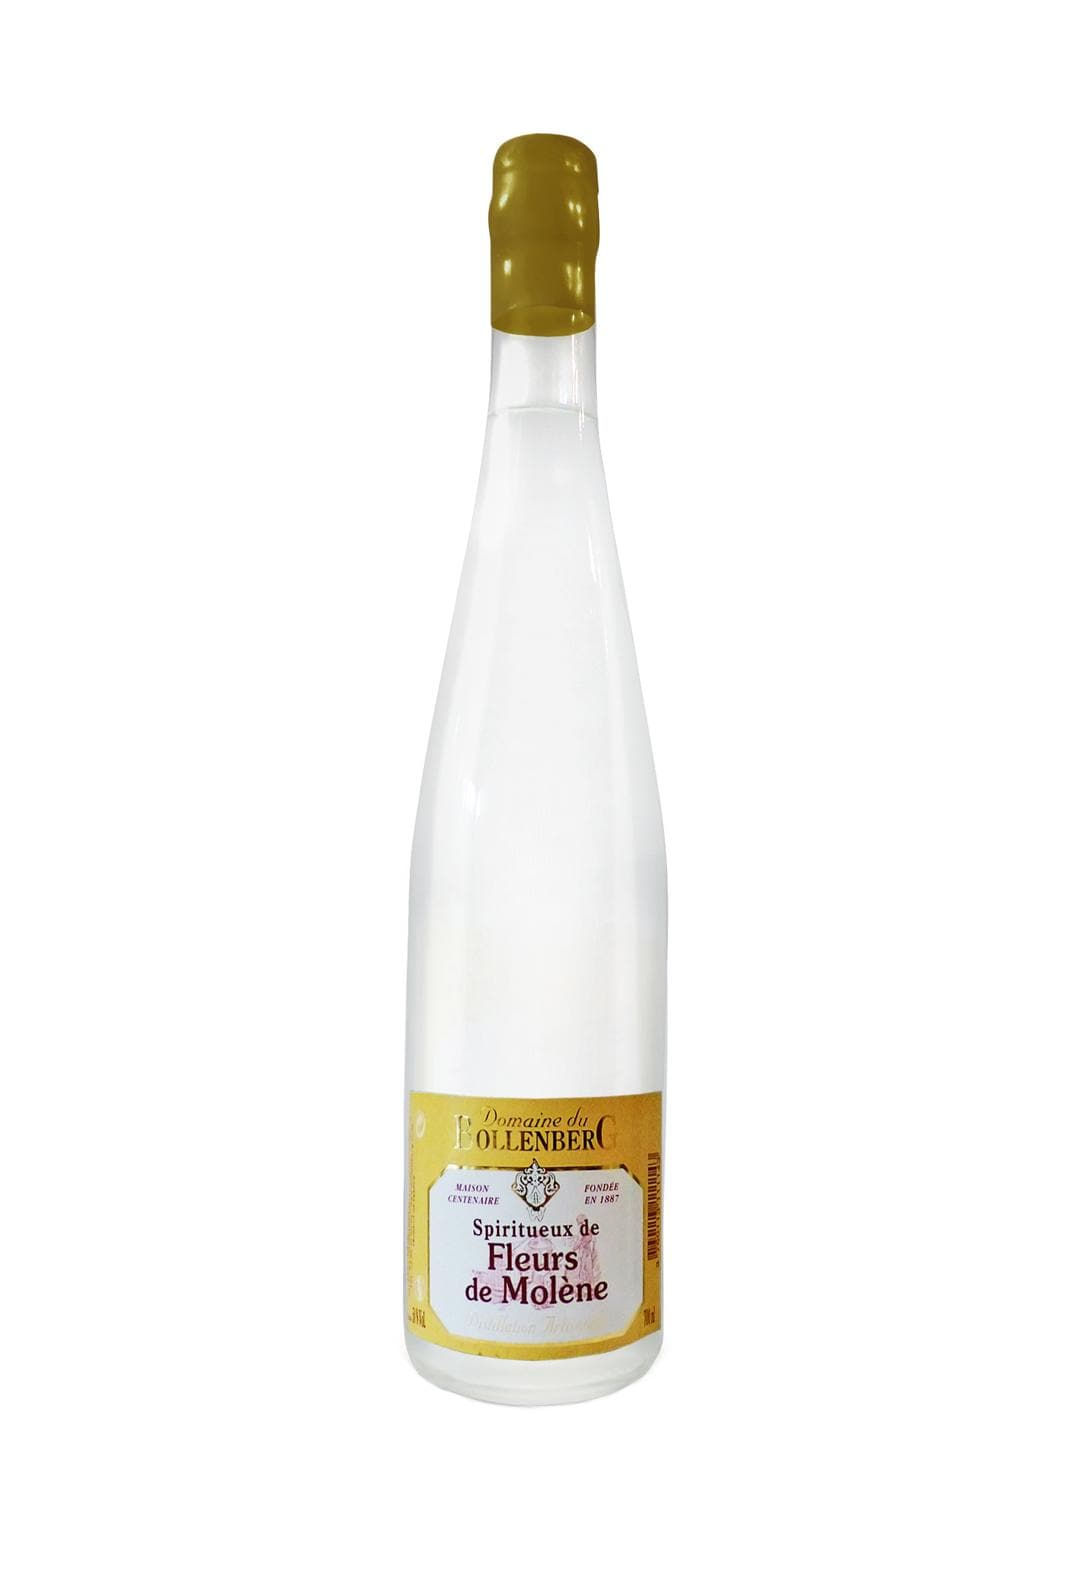 Bollenberg Eau de Vie de Fleurs de Molne (Mullein Flower spirit) 50% 350ml | Liqueurs | Shop online at Spirits of France